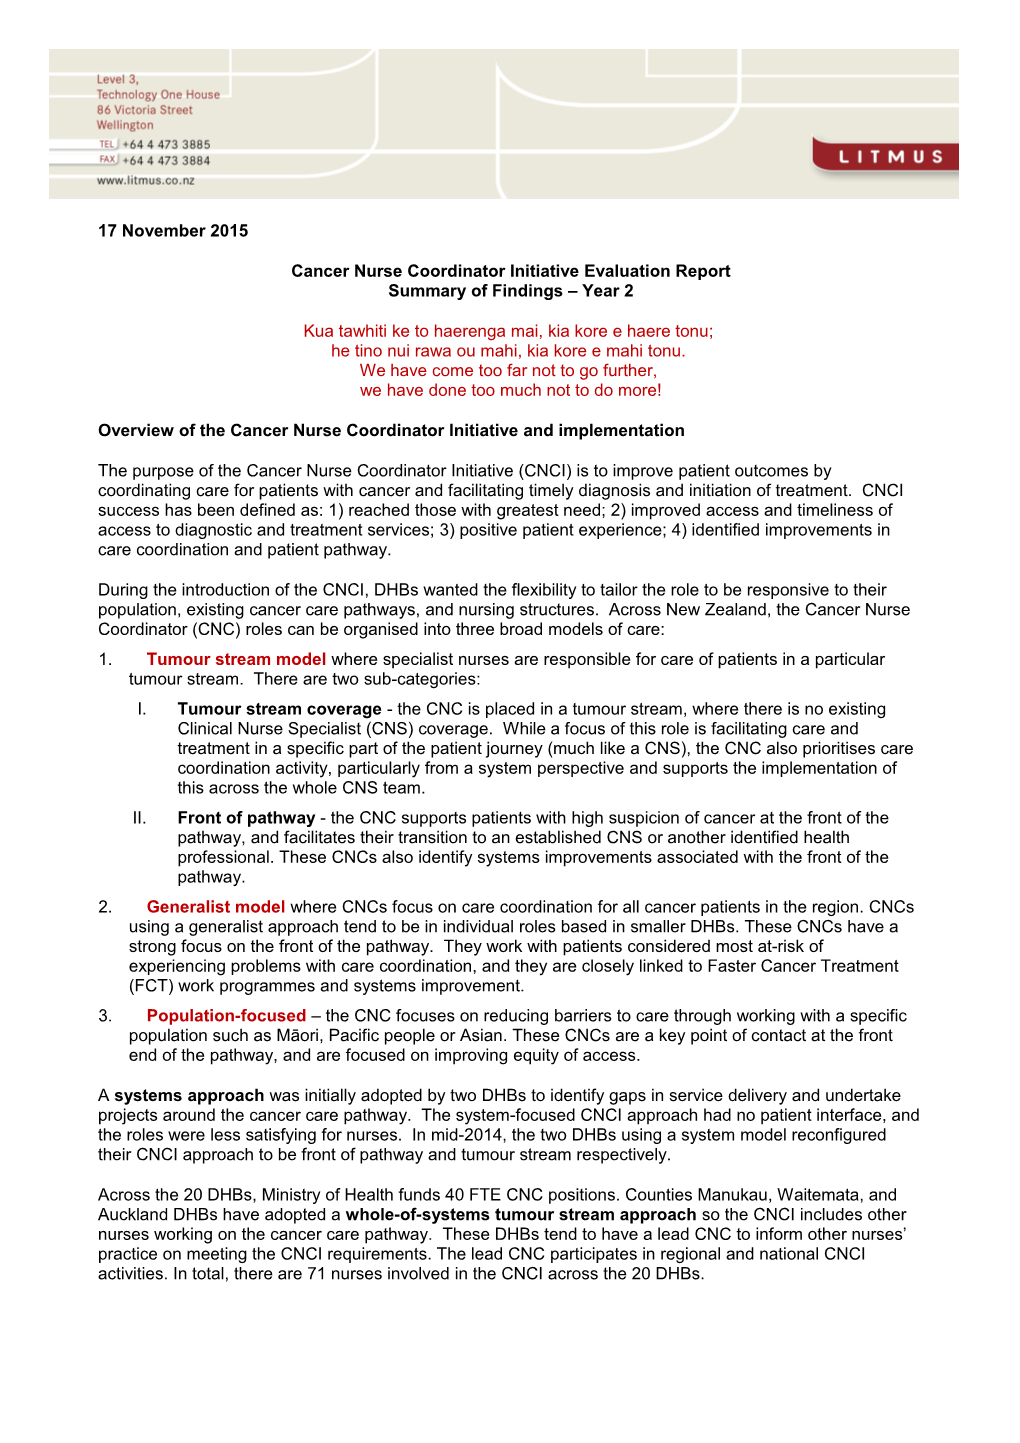 Cancer Nurse Coordinator Initiative Evaluation Report Summary of Findings Year 2